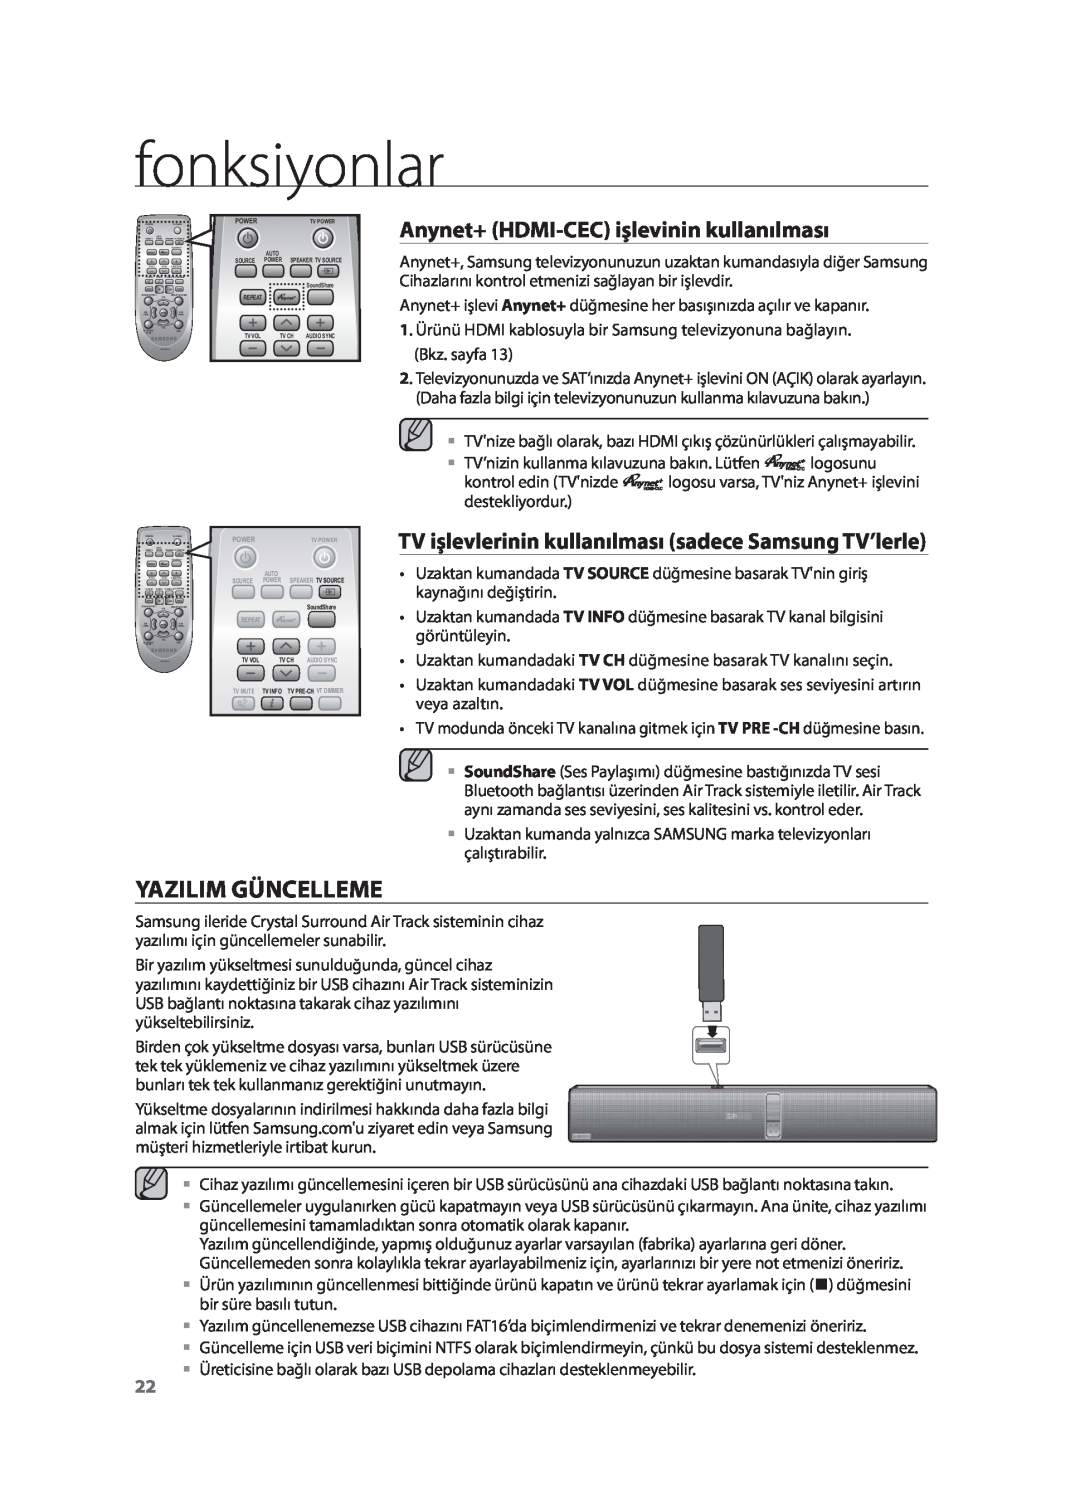 Samsung HW-F751/EN, HW-F751/XN, HW-F751/TK manual Yazilim Güncelleme, Anynet+ HDMI-CEC işlevinin kullanılması, fonksiyonlar 